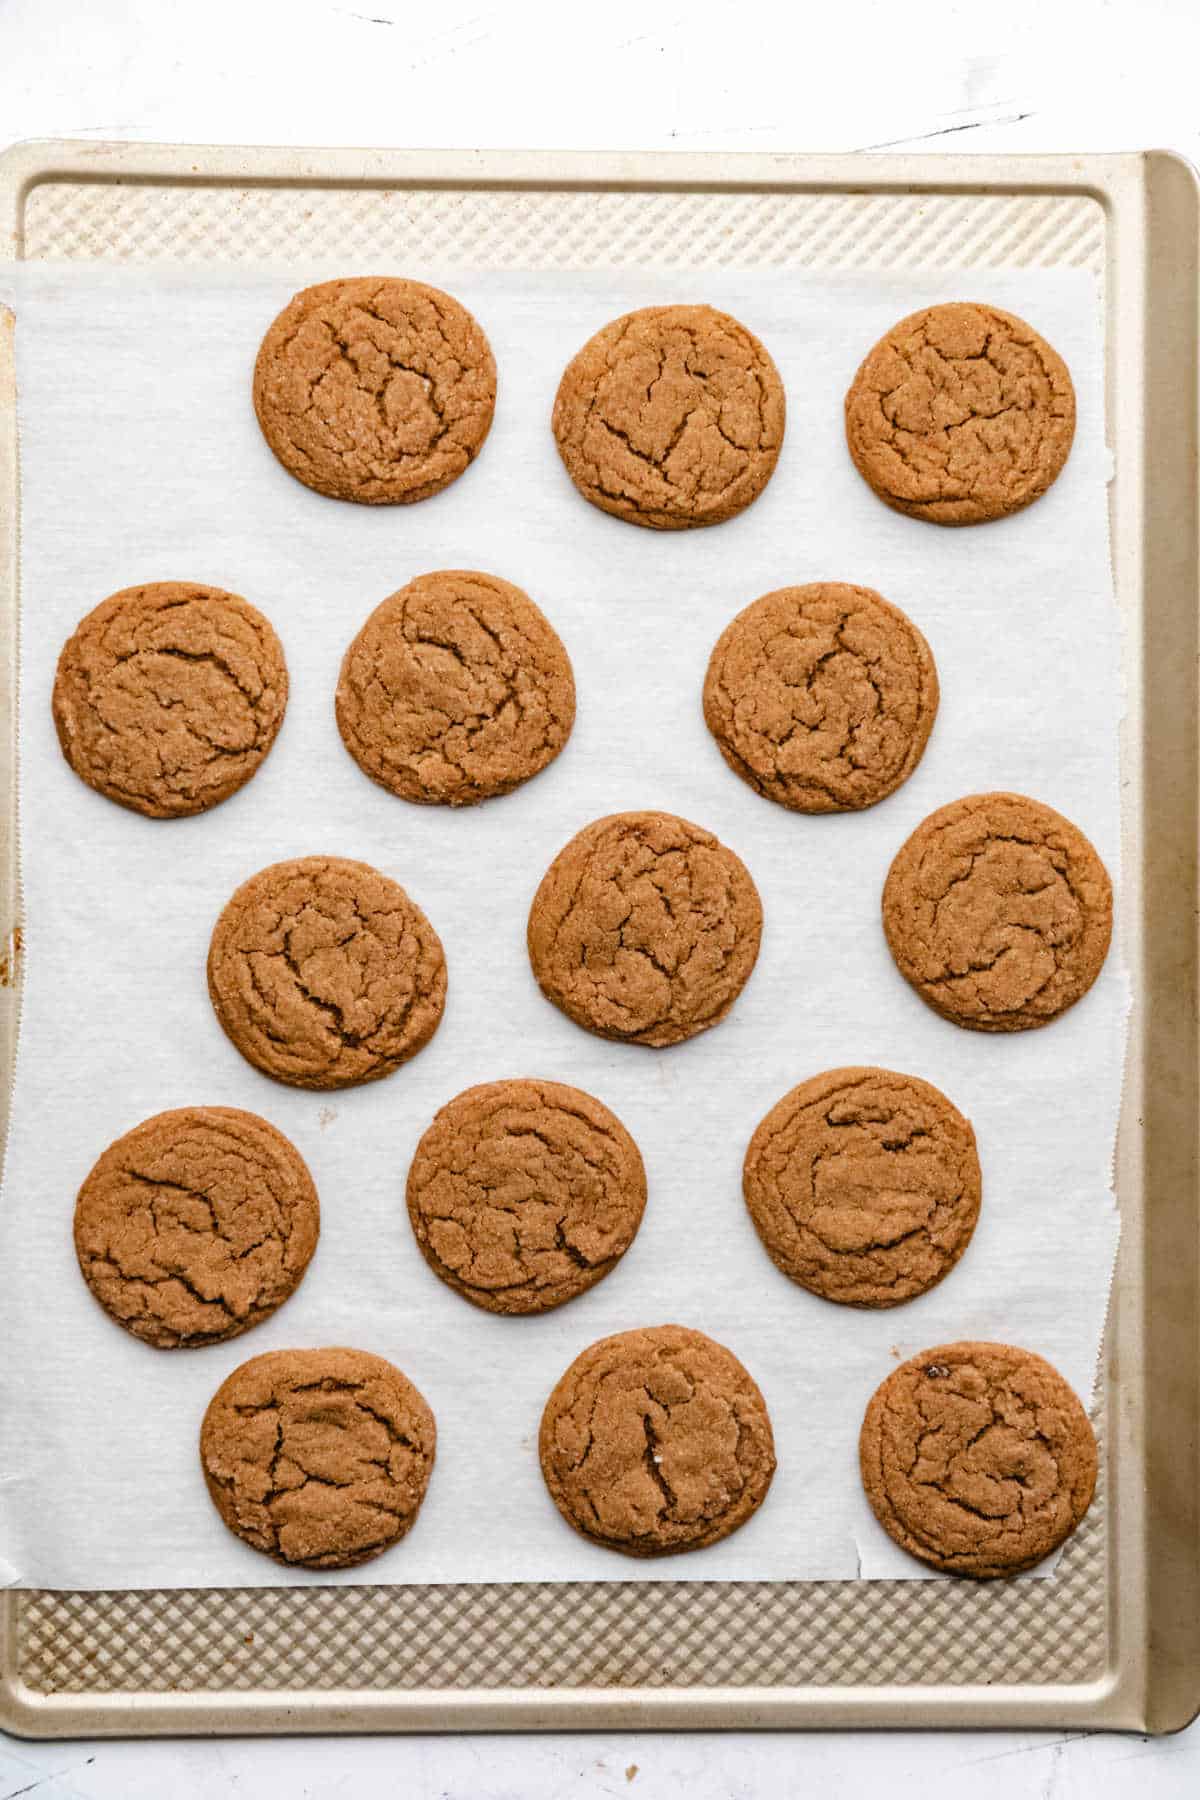 Baked molasses cookies on a baking sheet. 